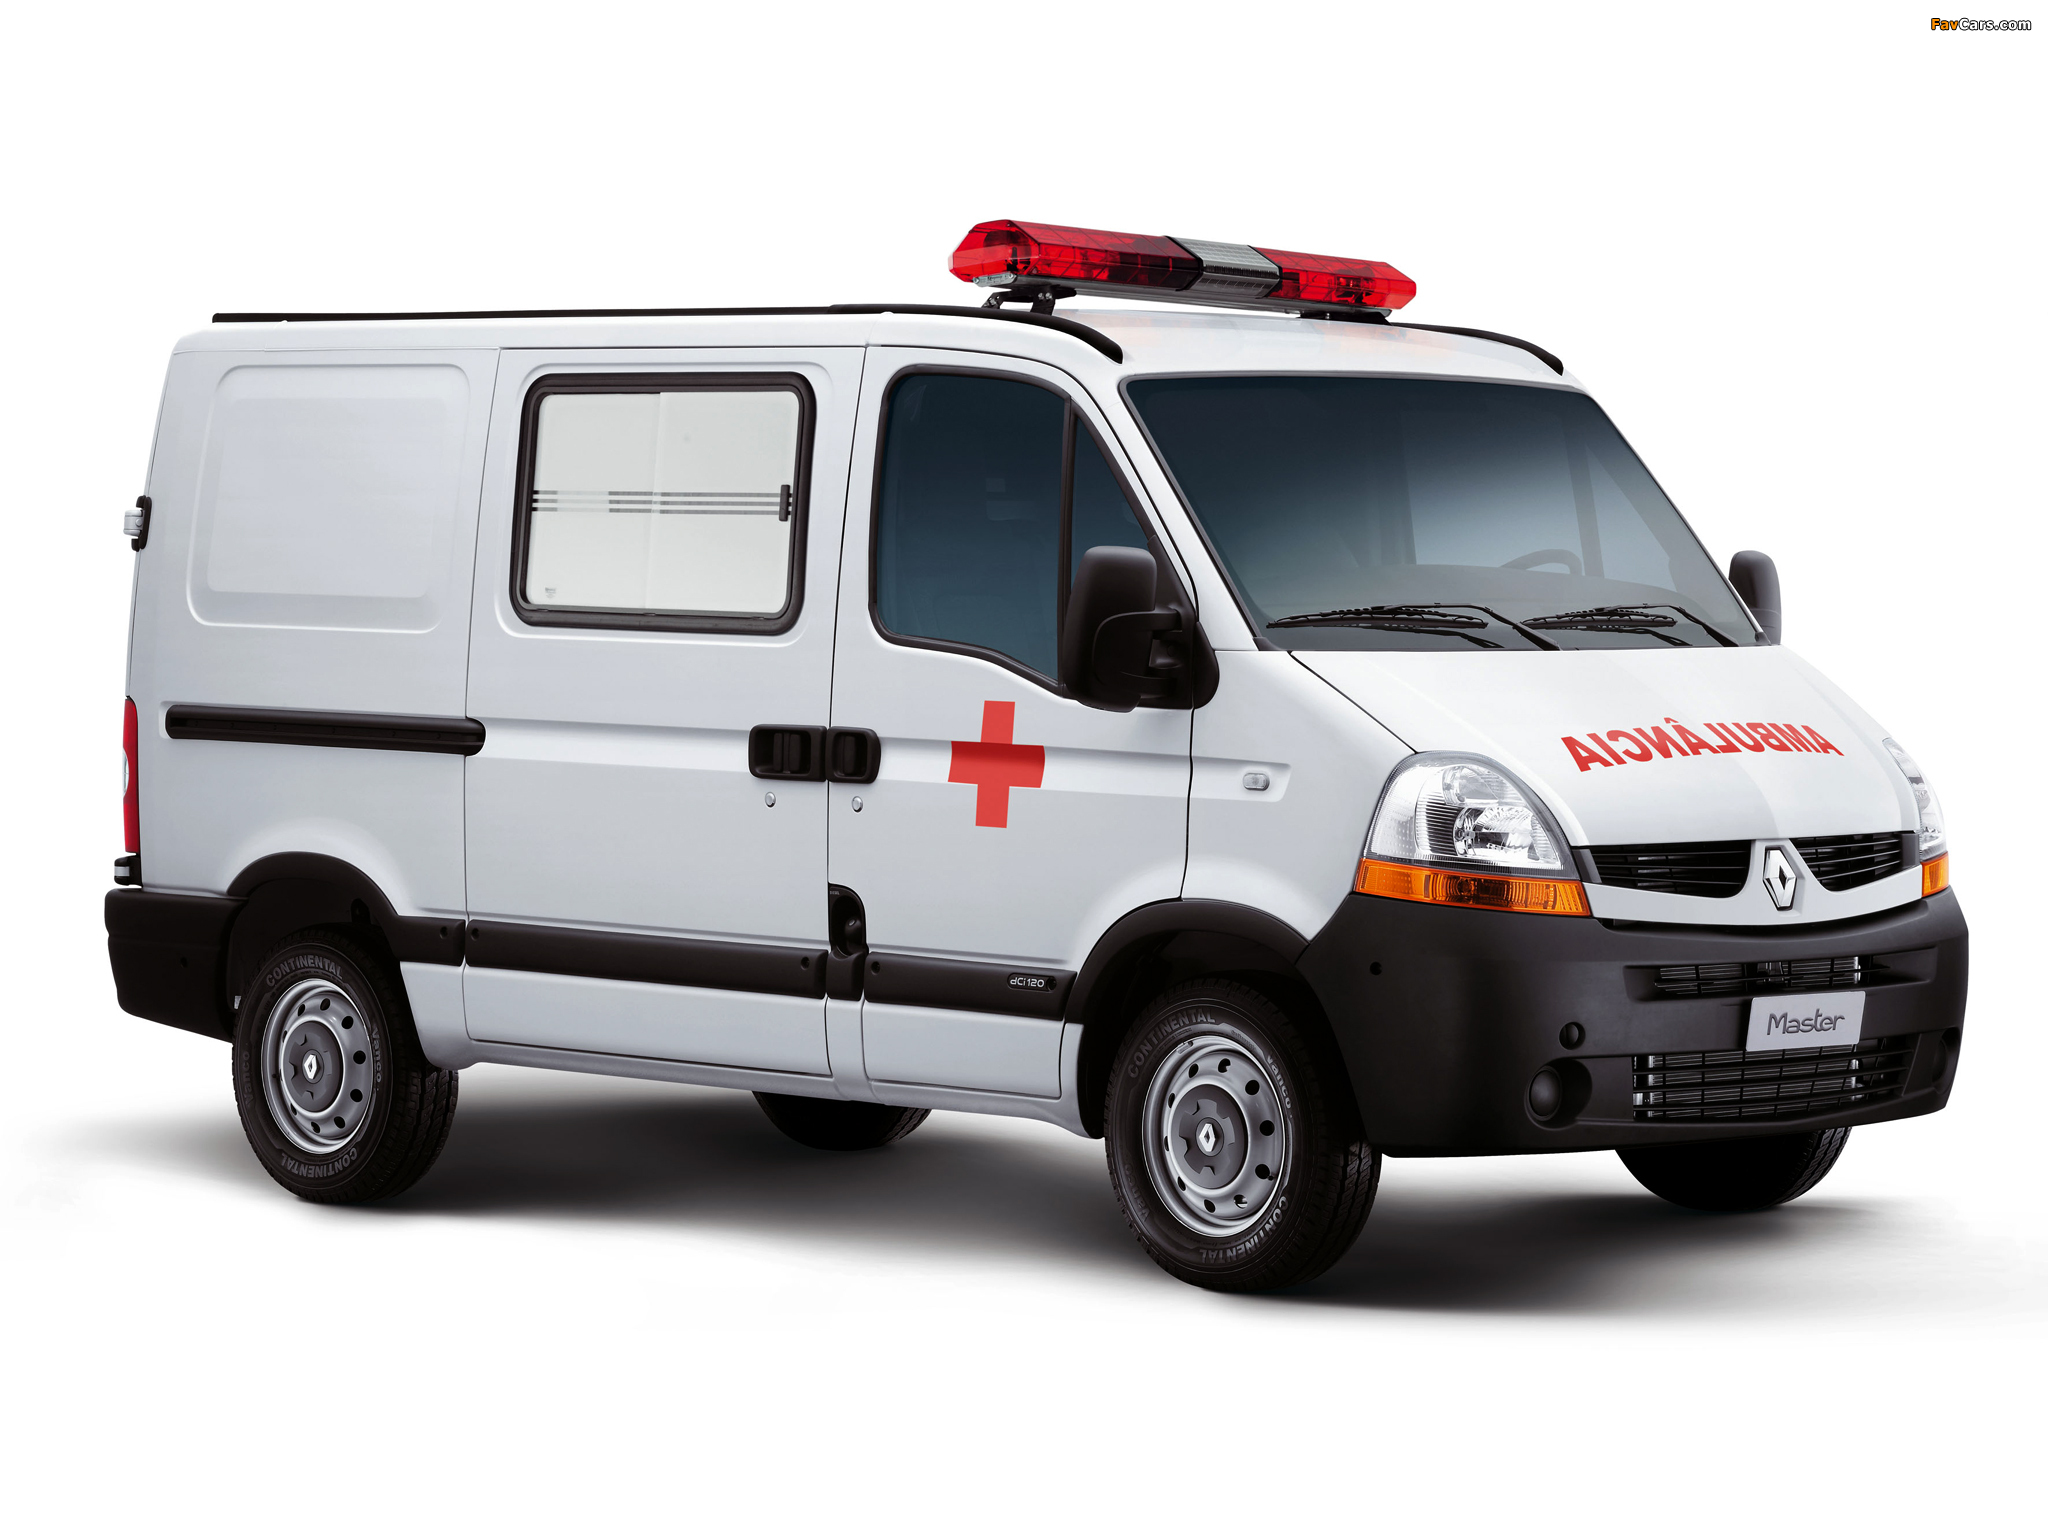 Звук машины скорой помощи. Renault Master 2017 скорая. Renault Master Ambulance car. Скорая машина Ambulance. Renault Master isolated.